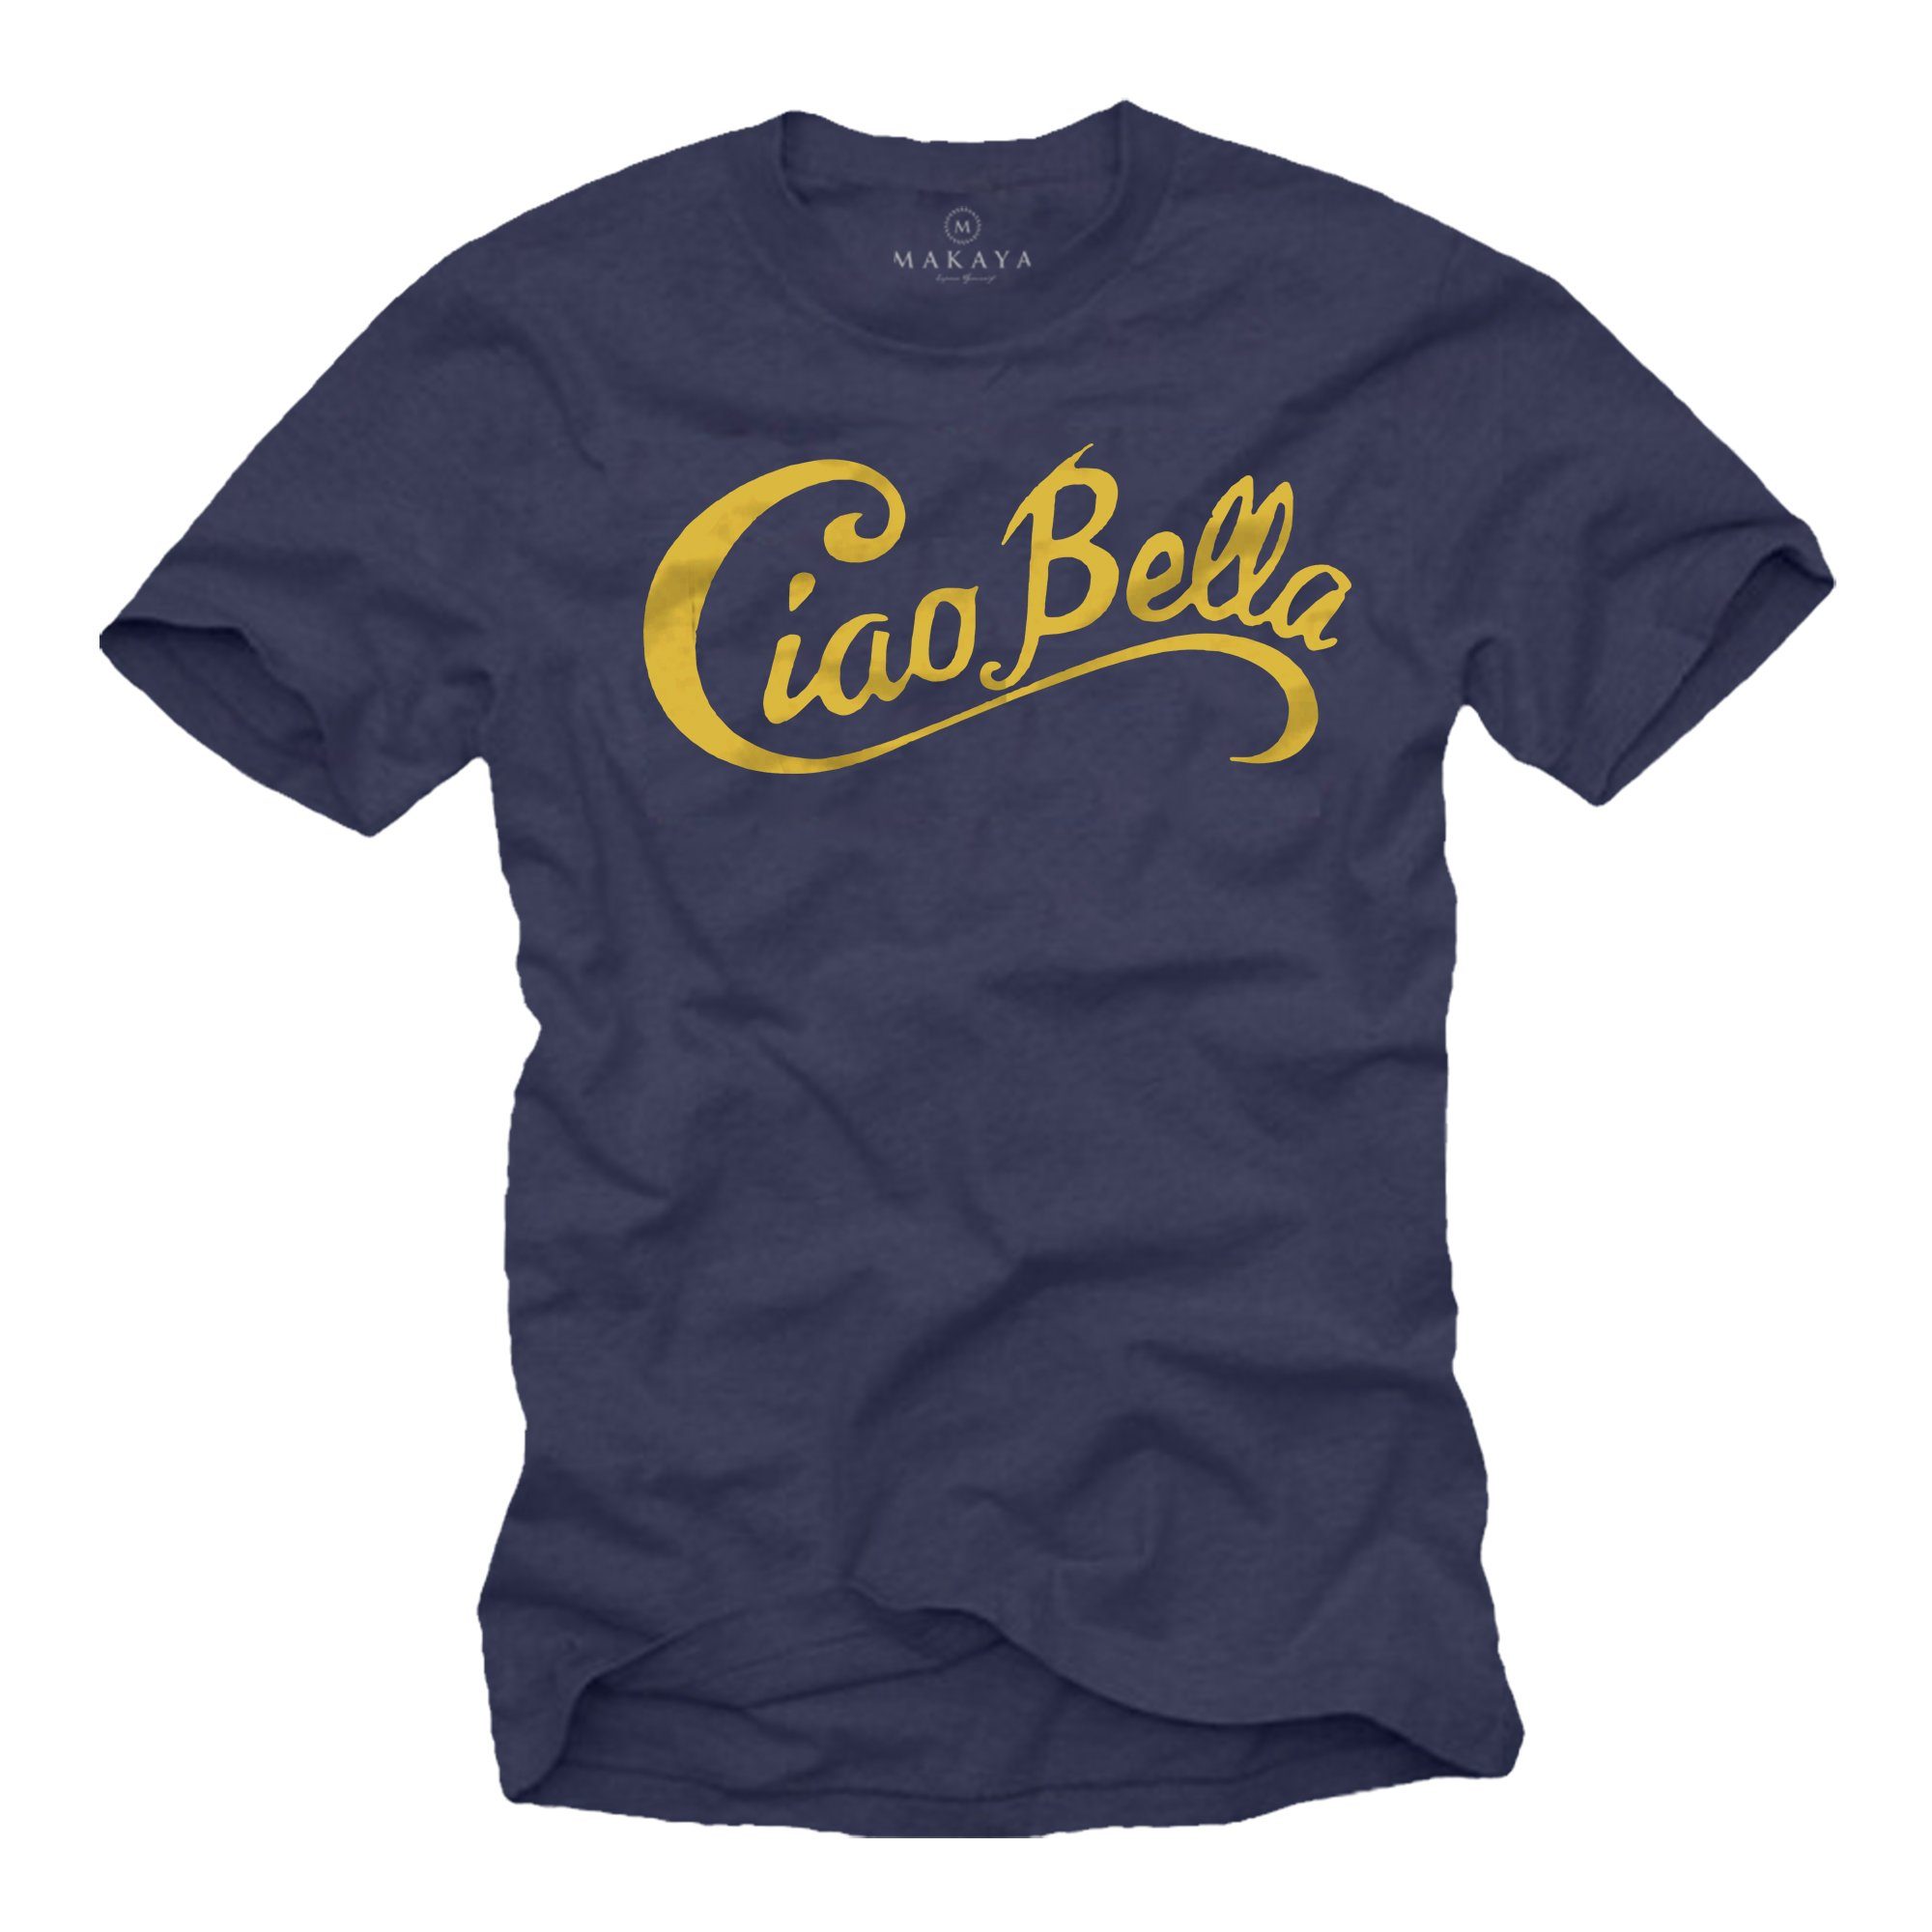 MAKAYA Print-Shirt Herren Italienischer Spruch Ciao Bella Coole Mode Italien Style Logo, Motiv Blau